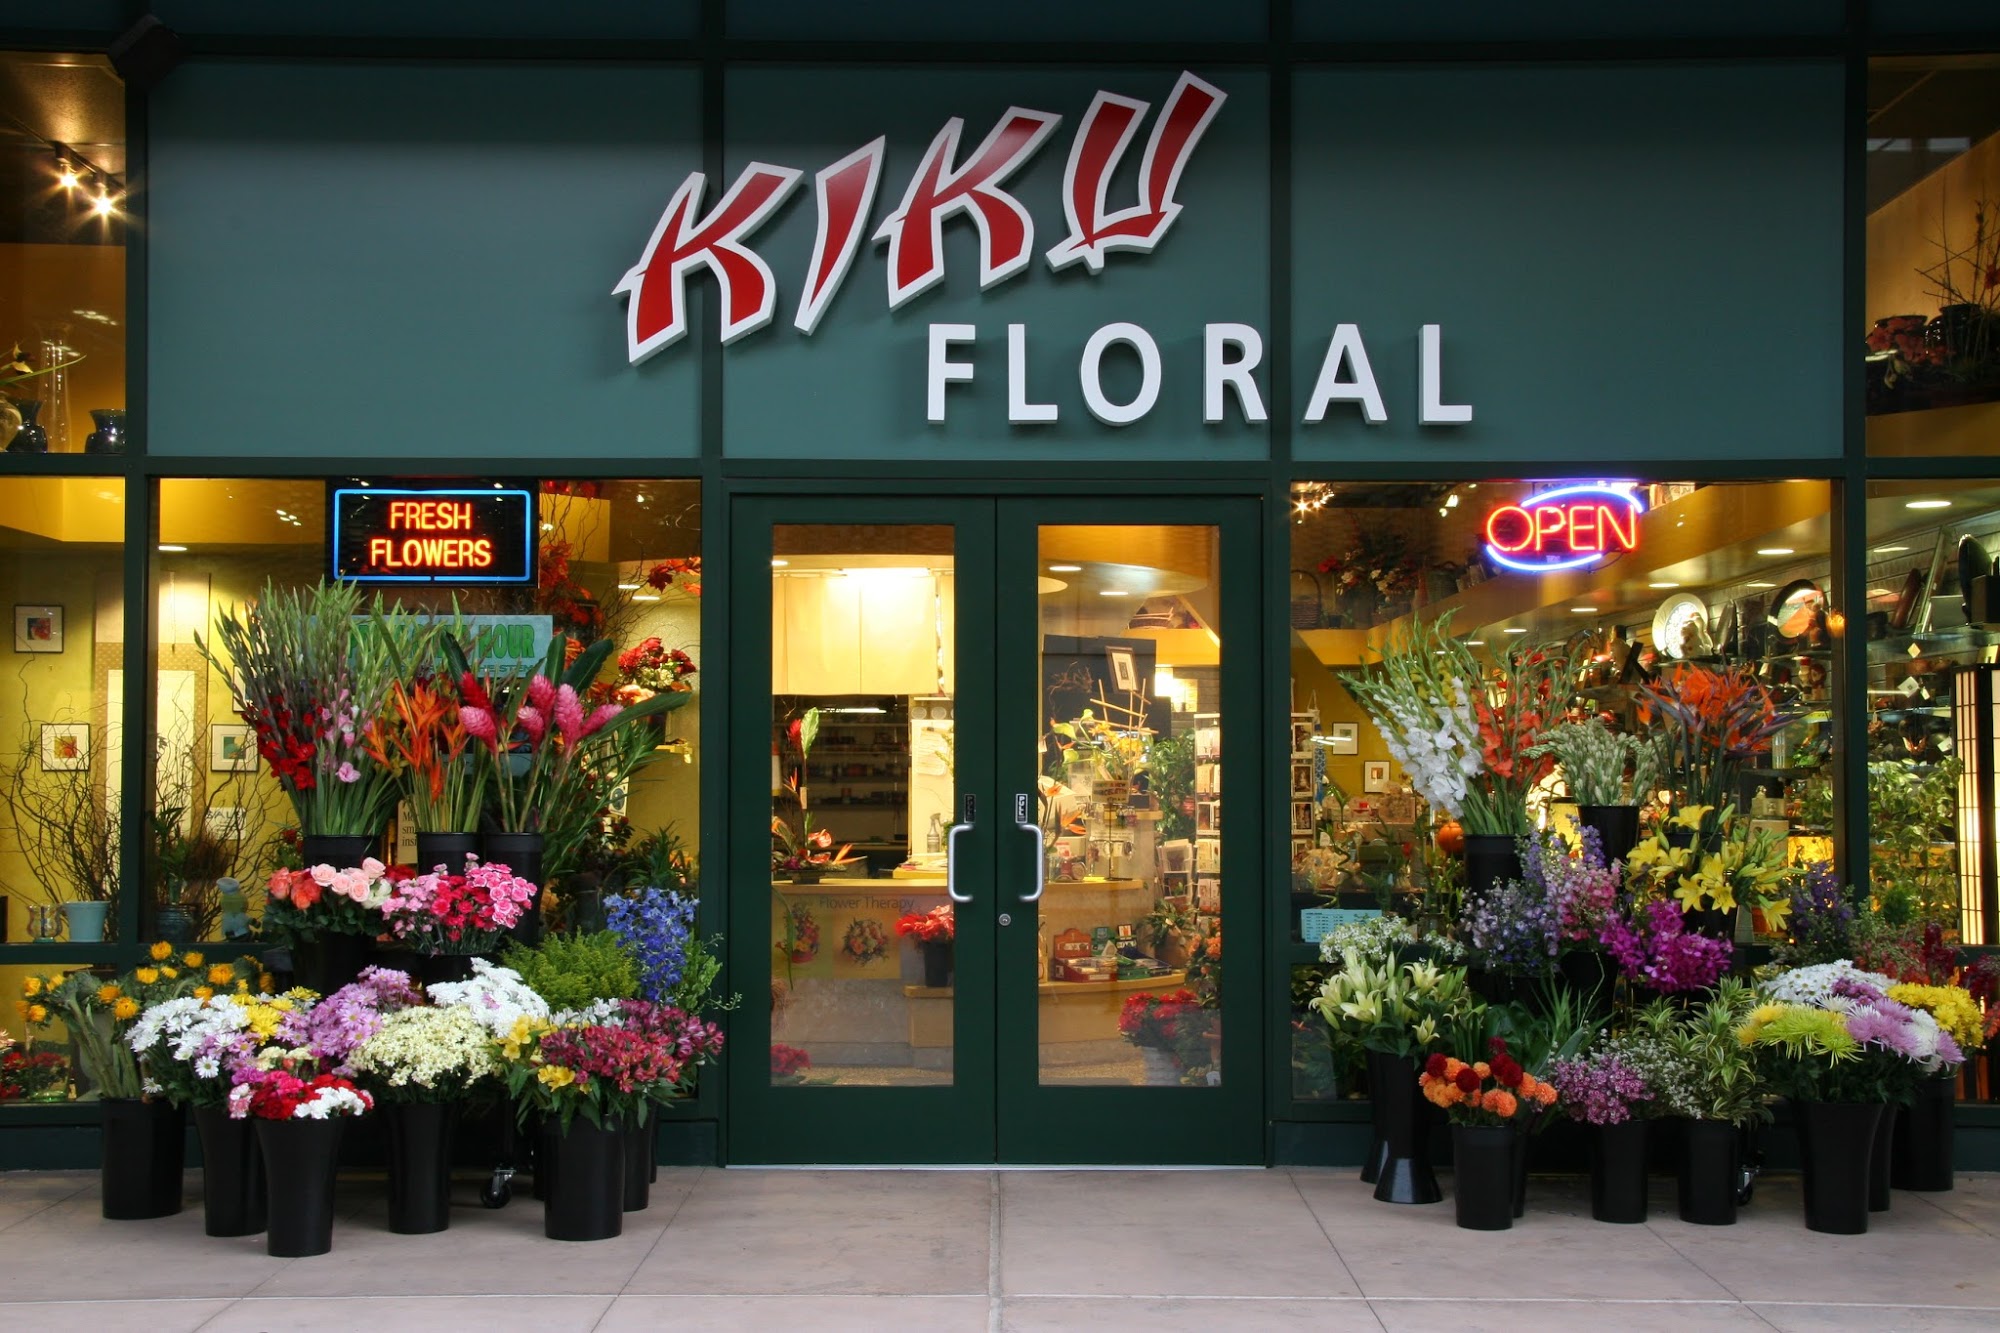 Kiku Floral